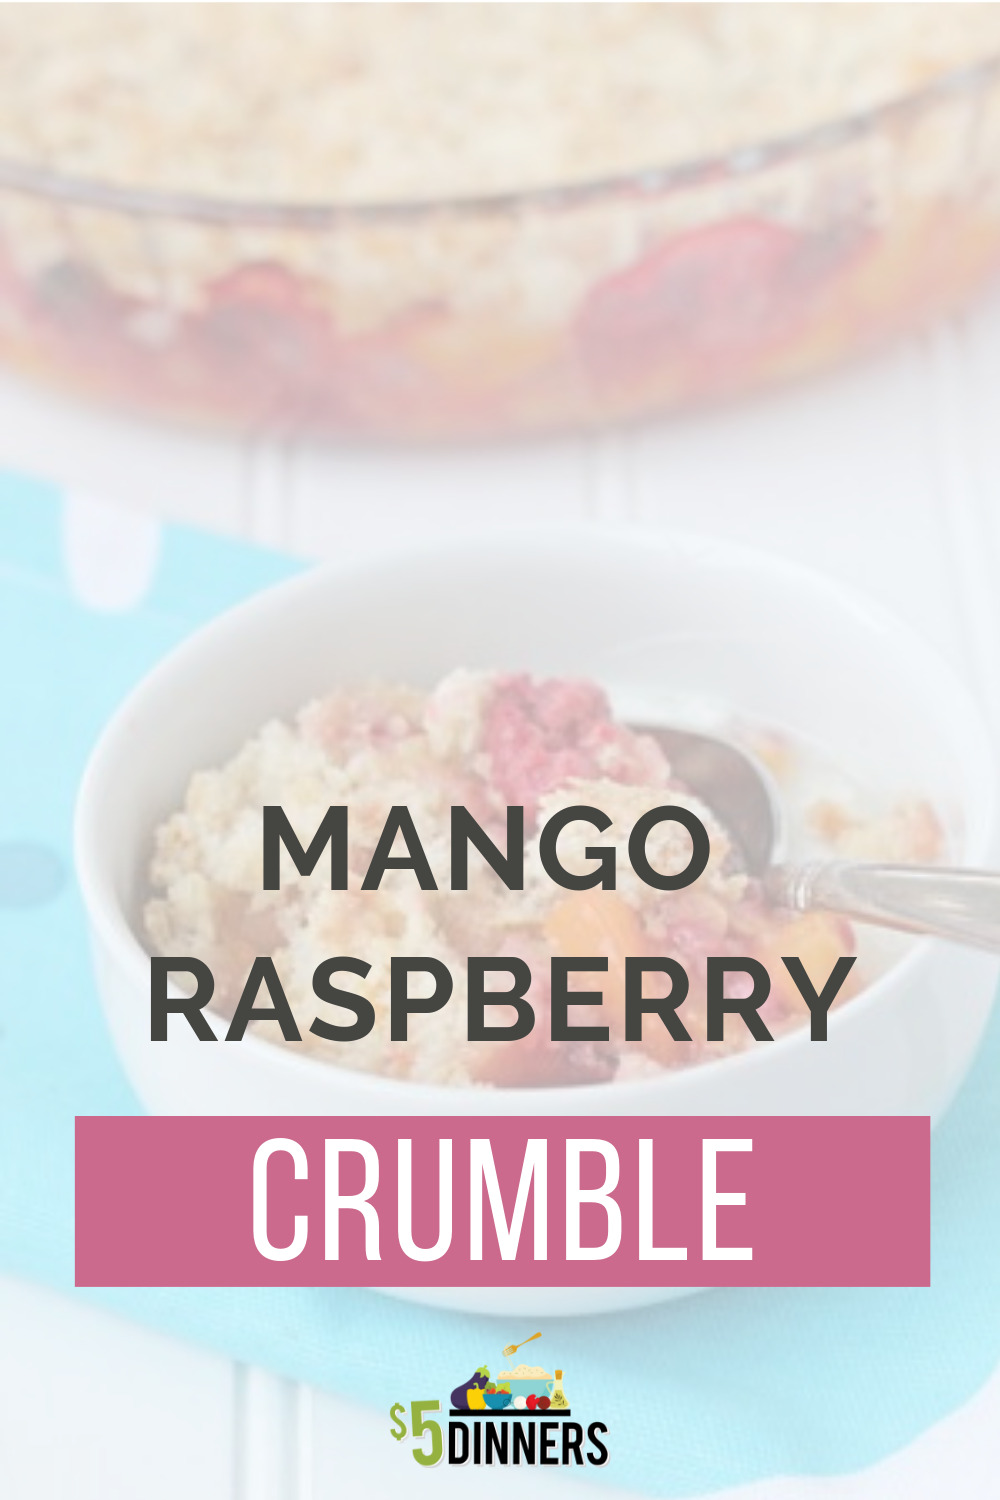 Simple, delicious recipe for the perfect summer dessert - Mango Raspberry Crumble!